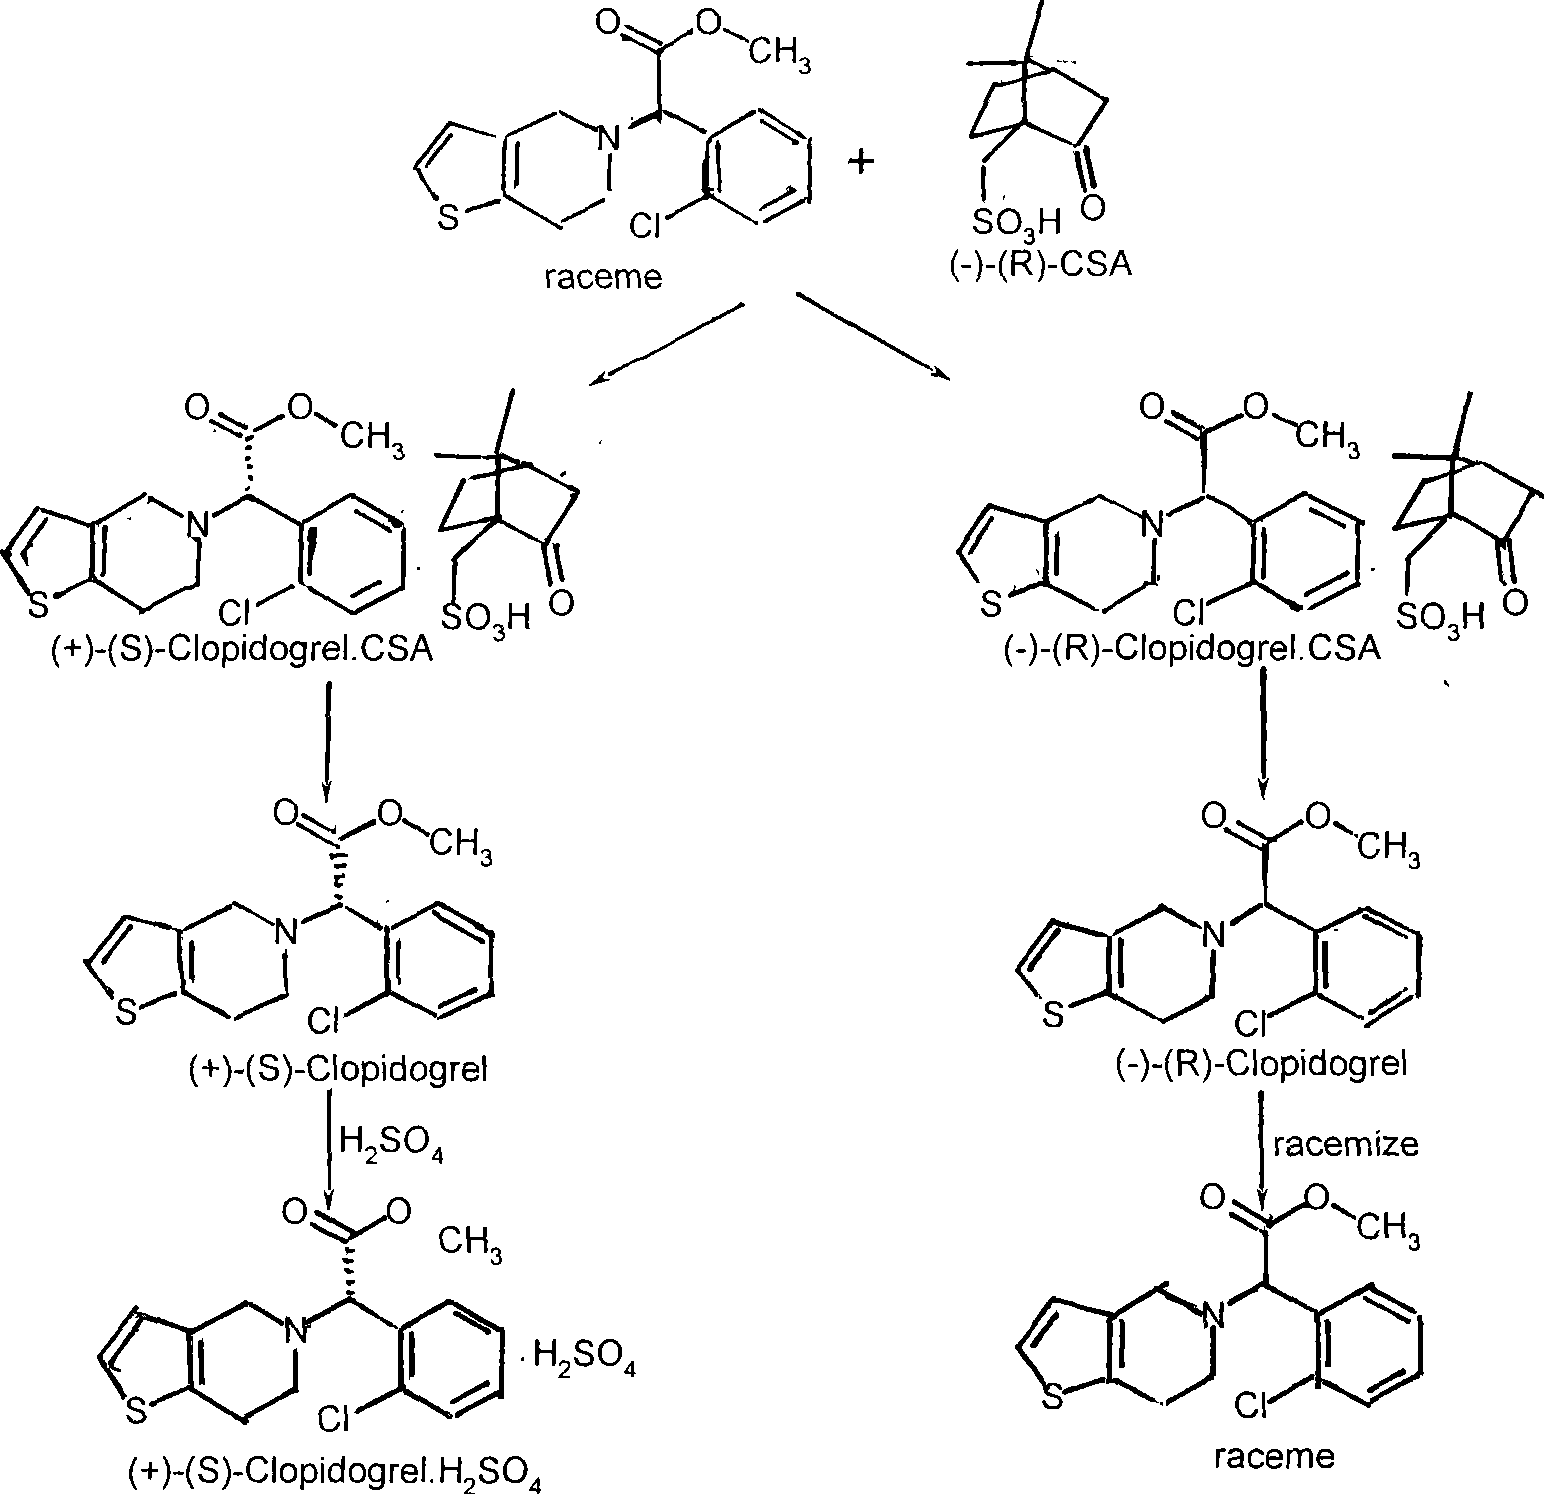 Production method of (-)-(R)- clopidogrel (-)-(R)-camphorsulfonate racemisation